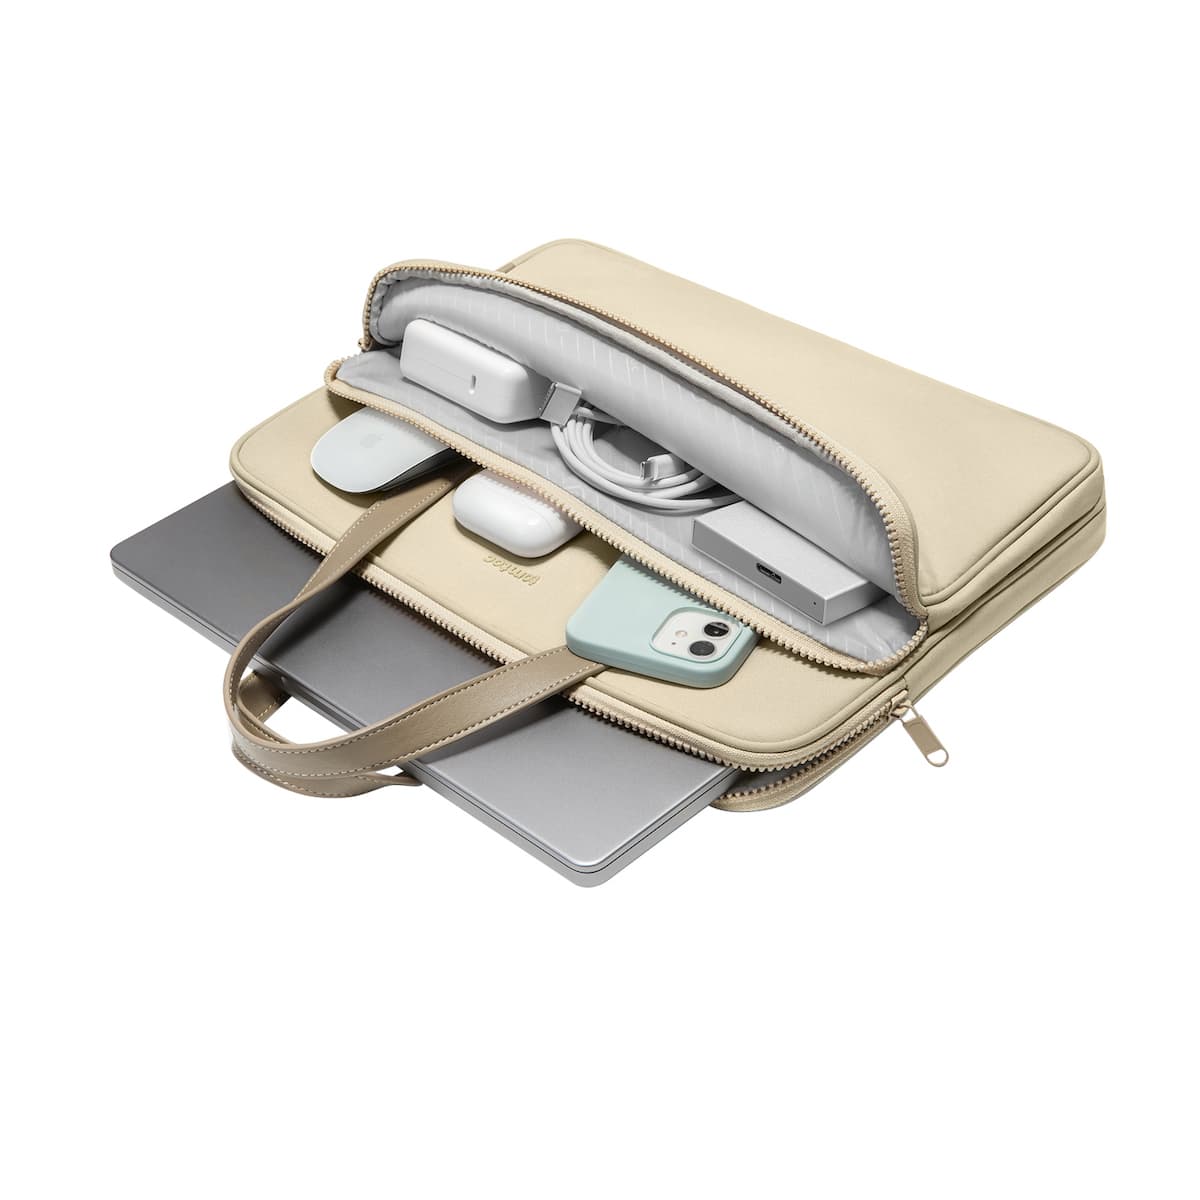 The Her-H21 Laptop Handbag For 14 inch MacBook Pro